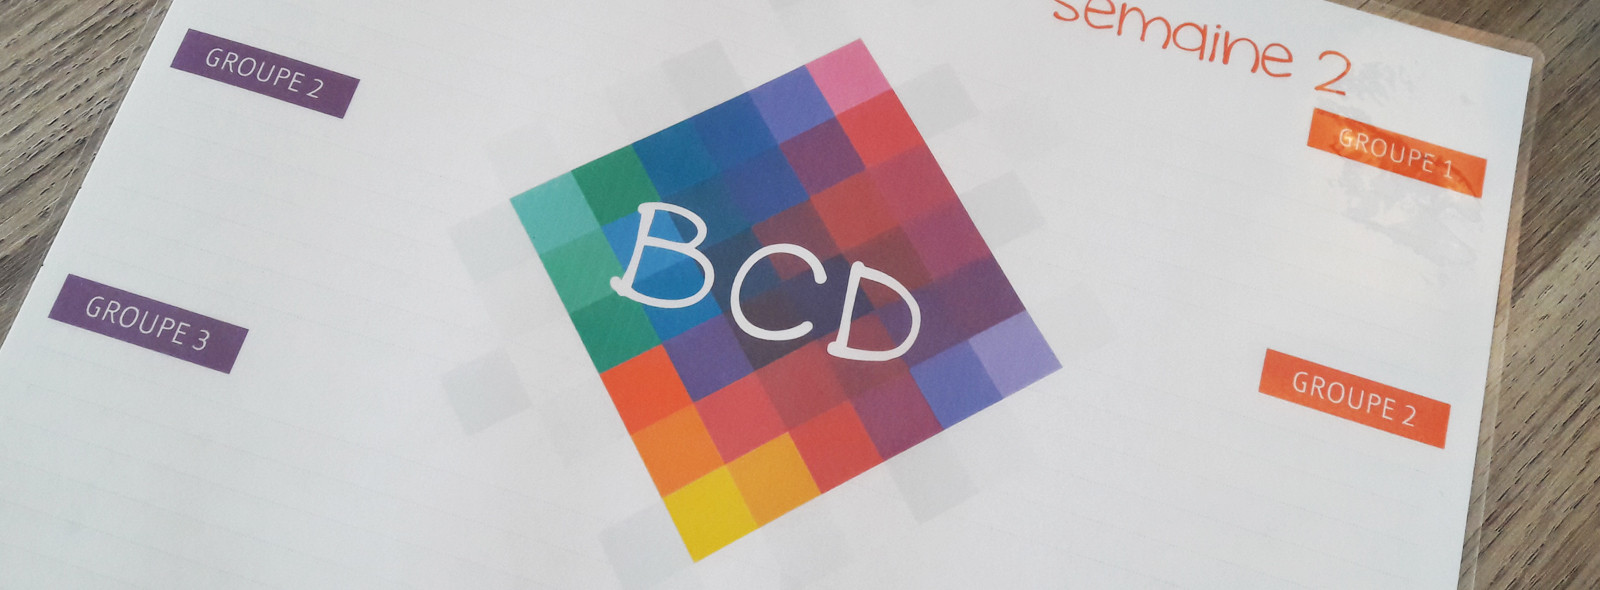 Affichage BCD